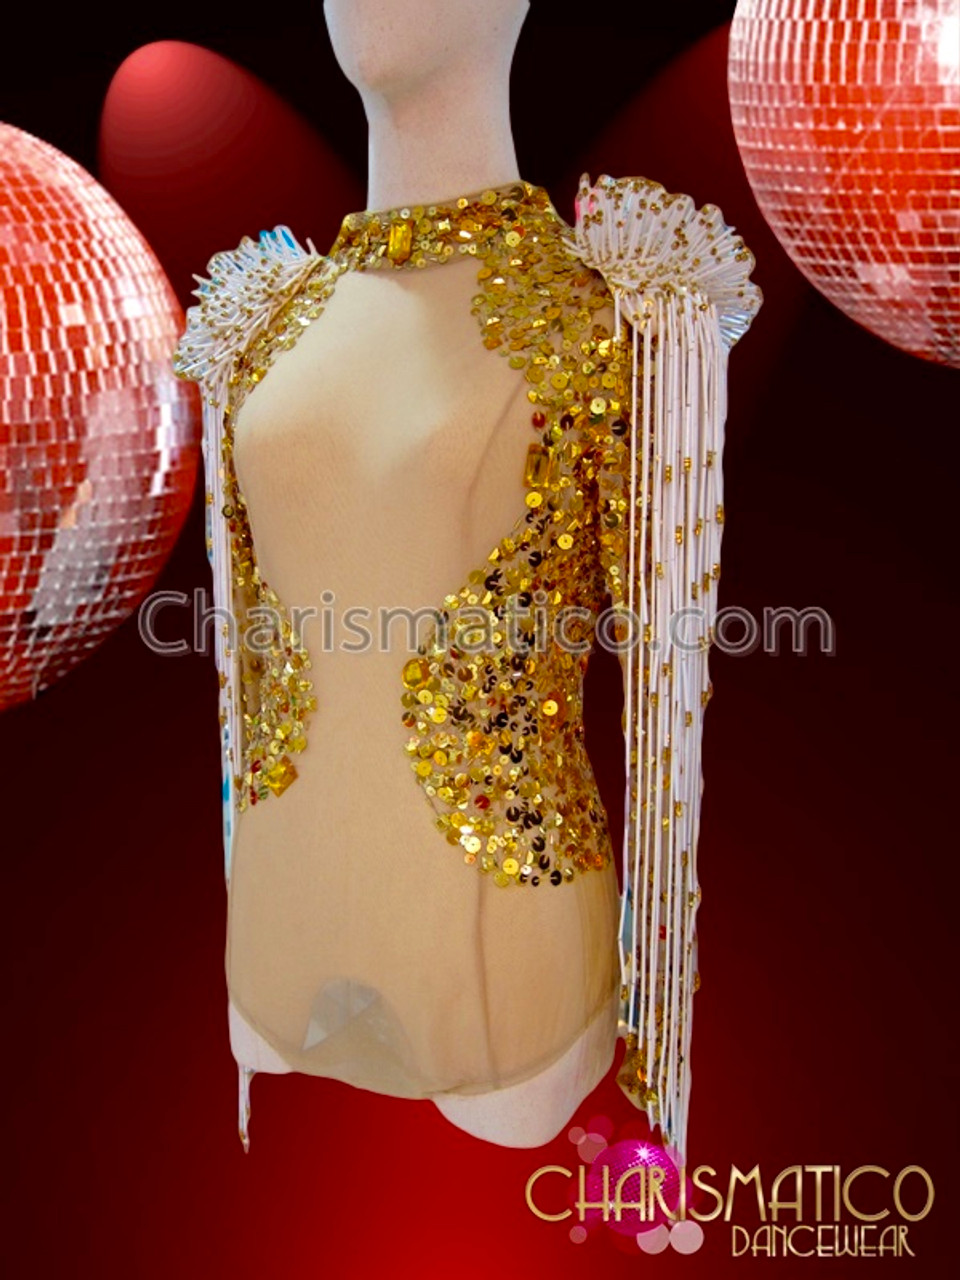 Red Showgirl Shoulder Pad With Floral Details And Tassels